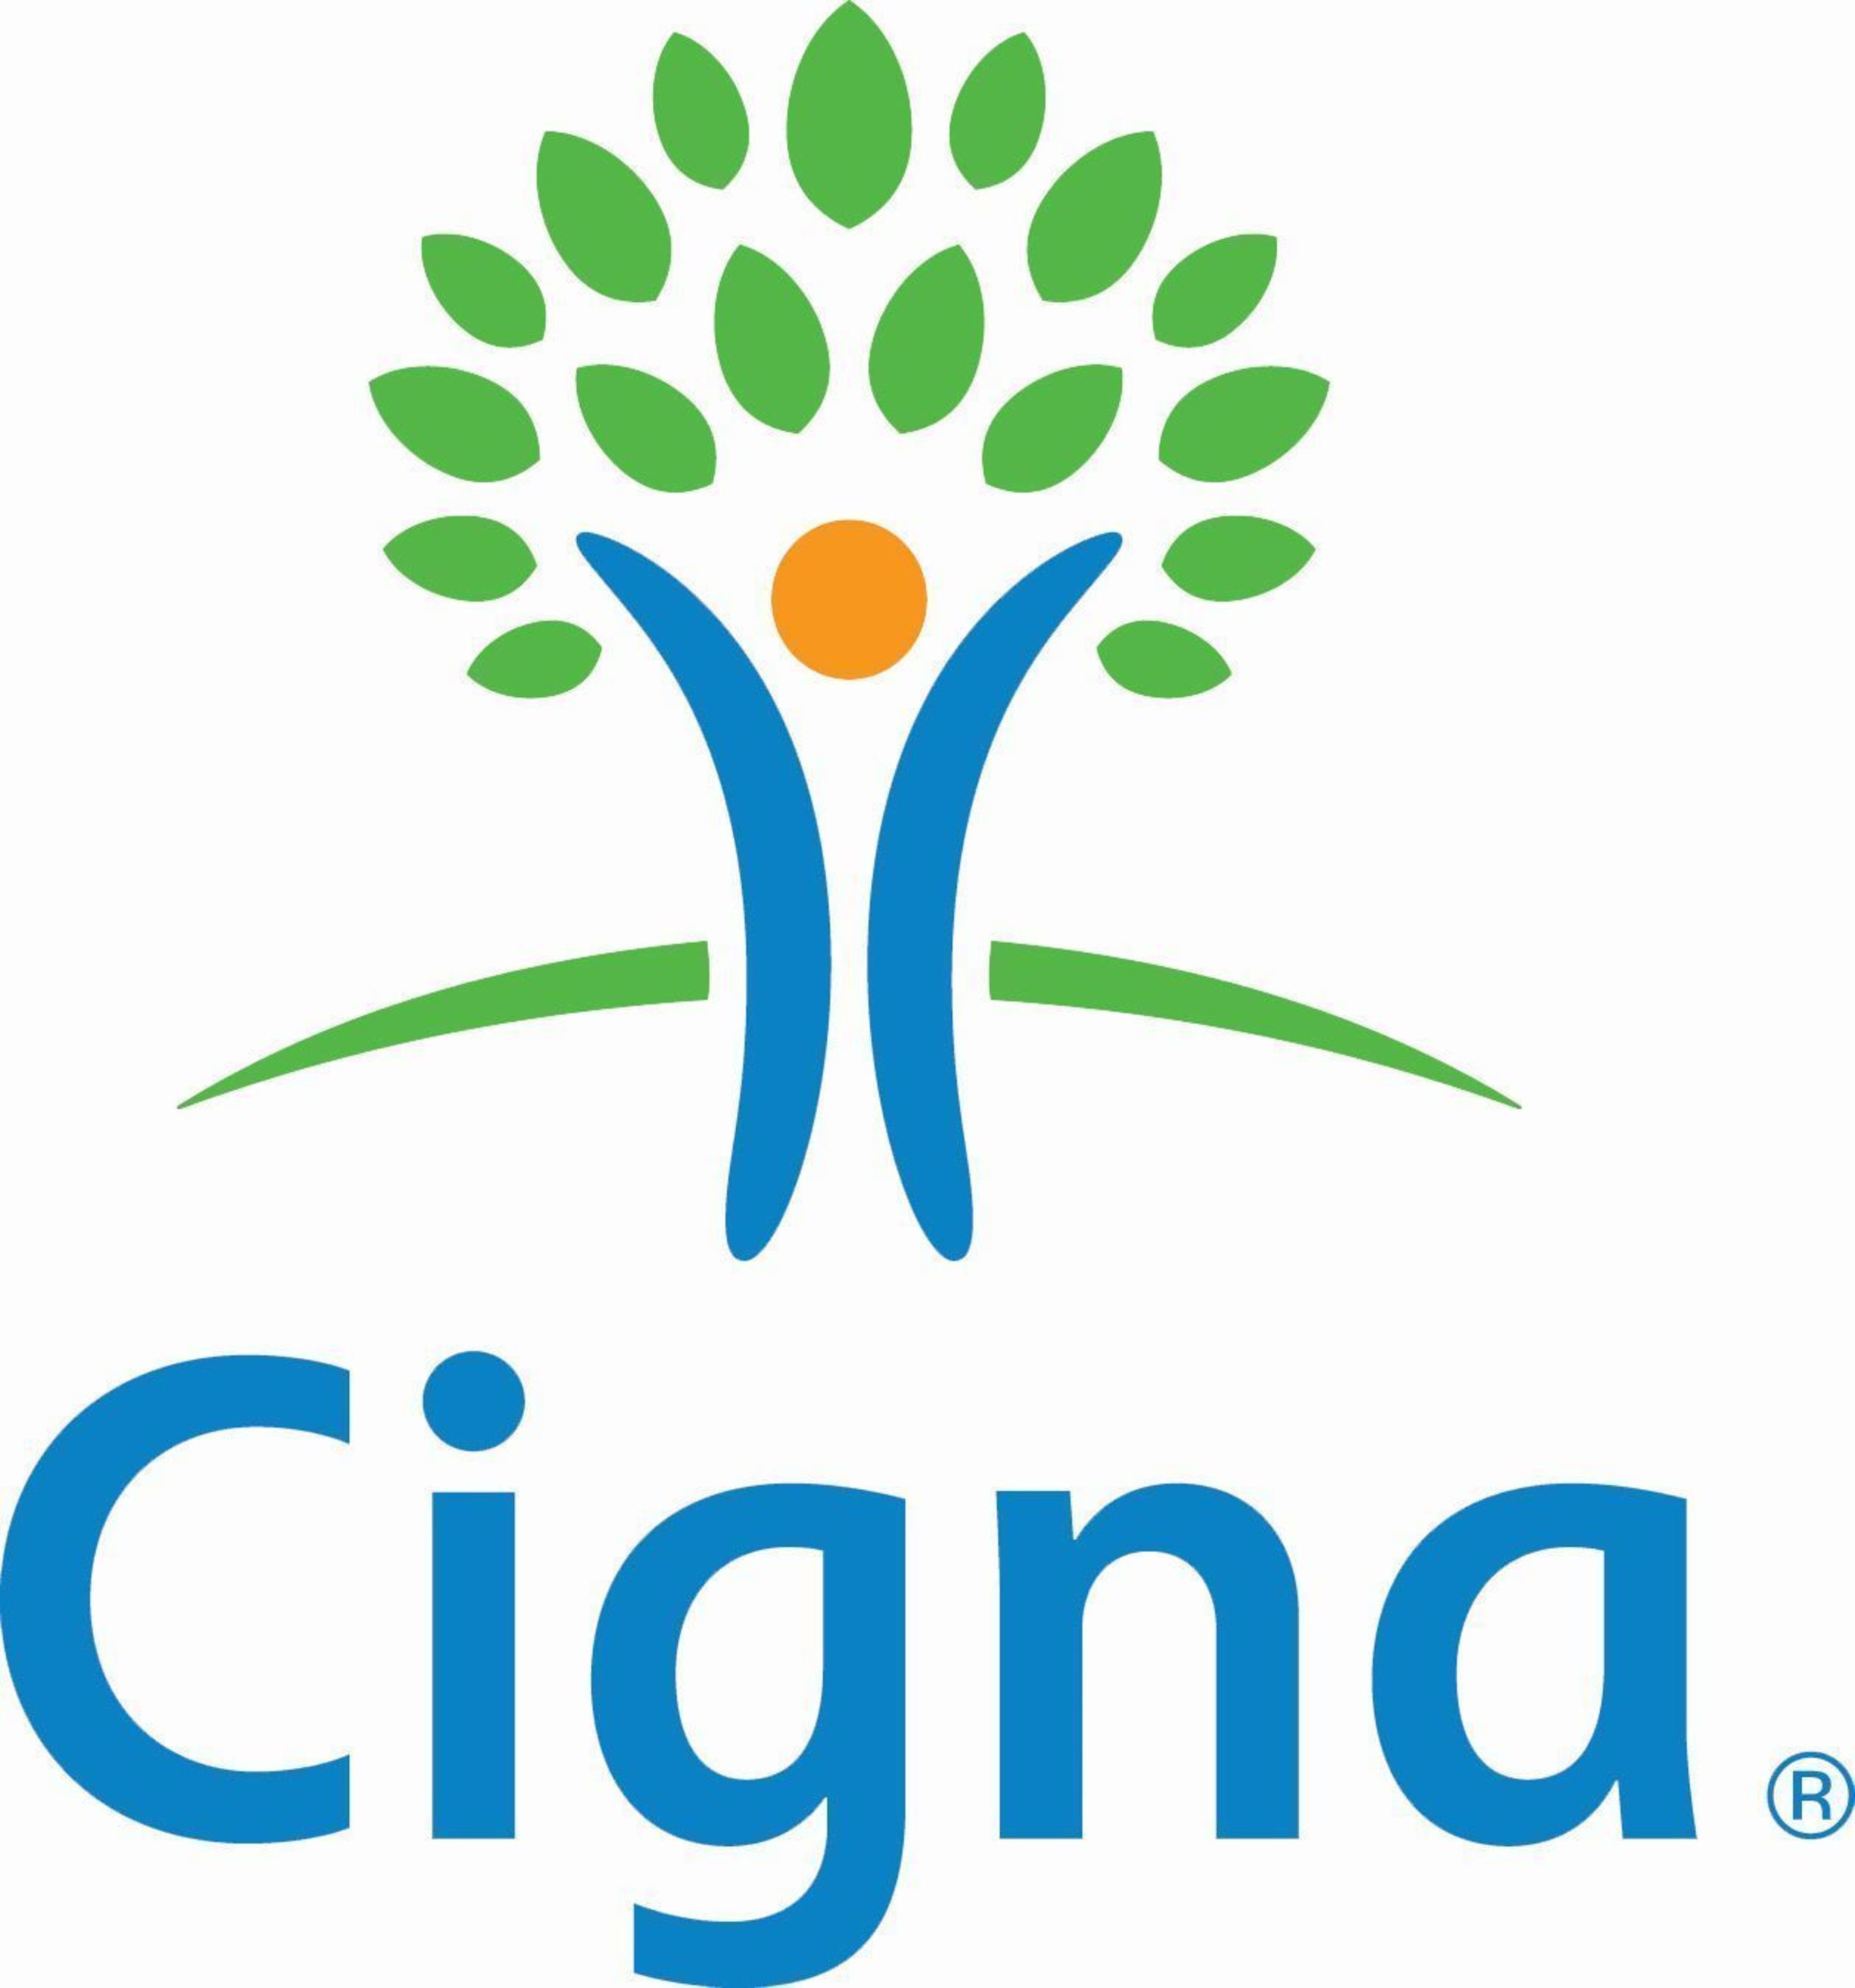 Cigna Global: International Health Insurance for Individuals and Families (PRNewsFoto/Cigna Global)